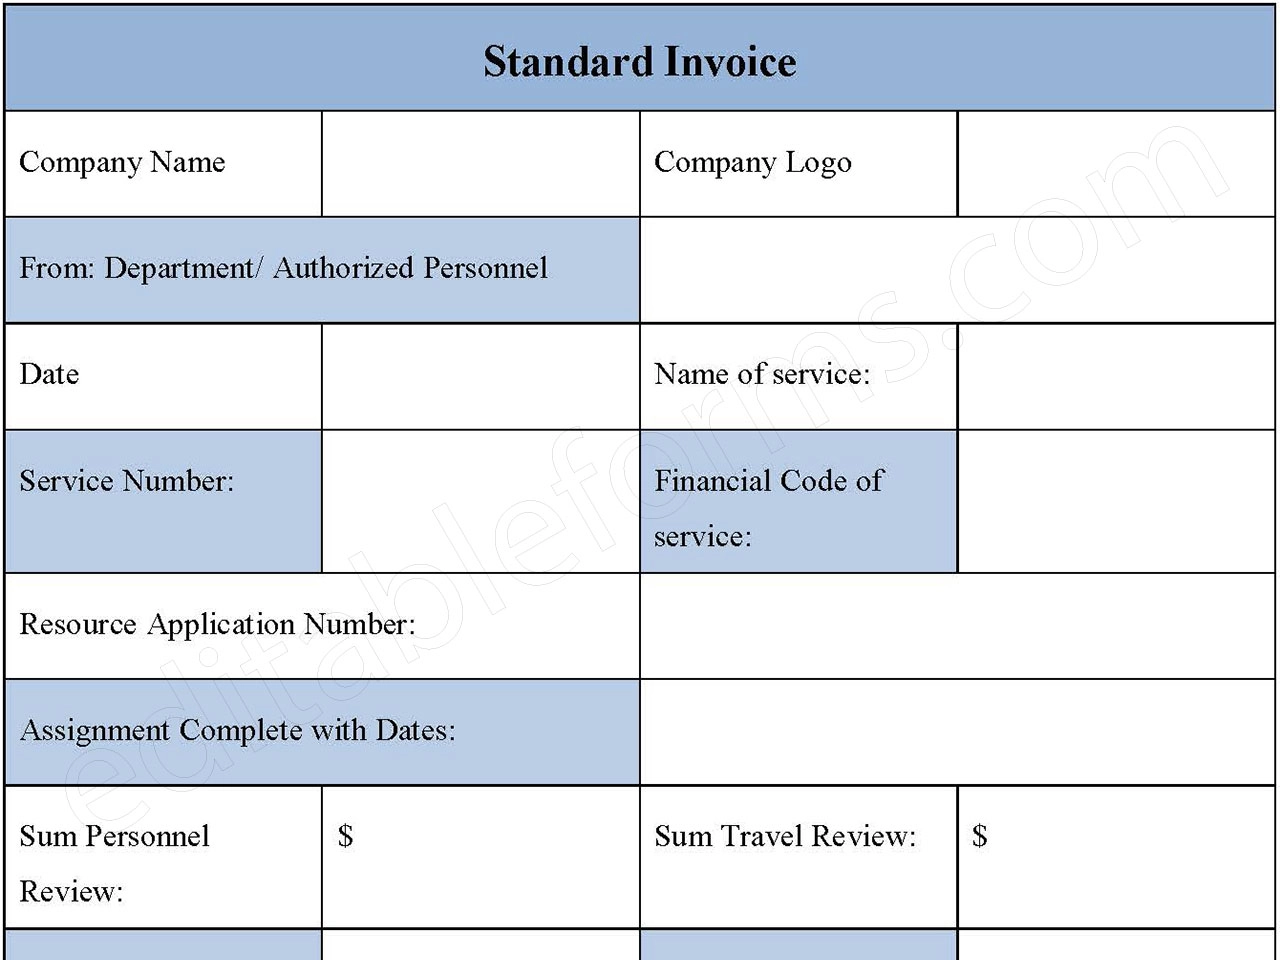 Standard Invoice Form